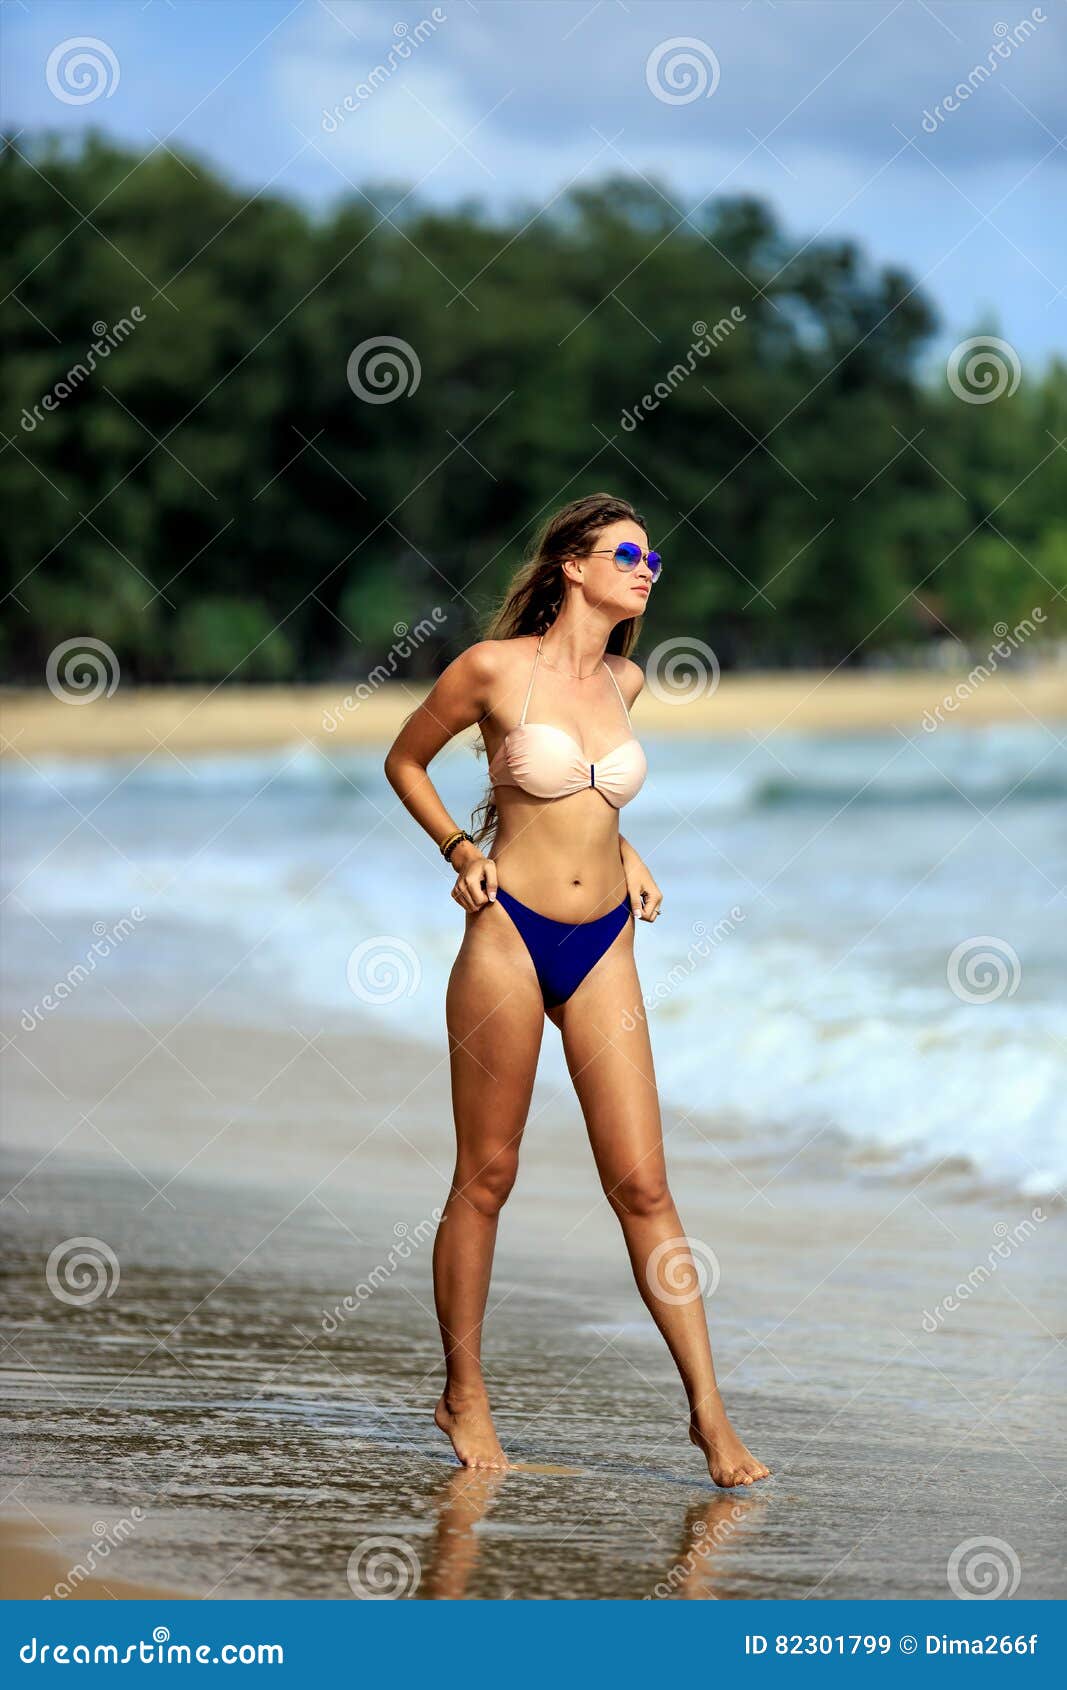 bikini model walk Figure